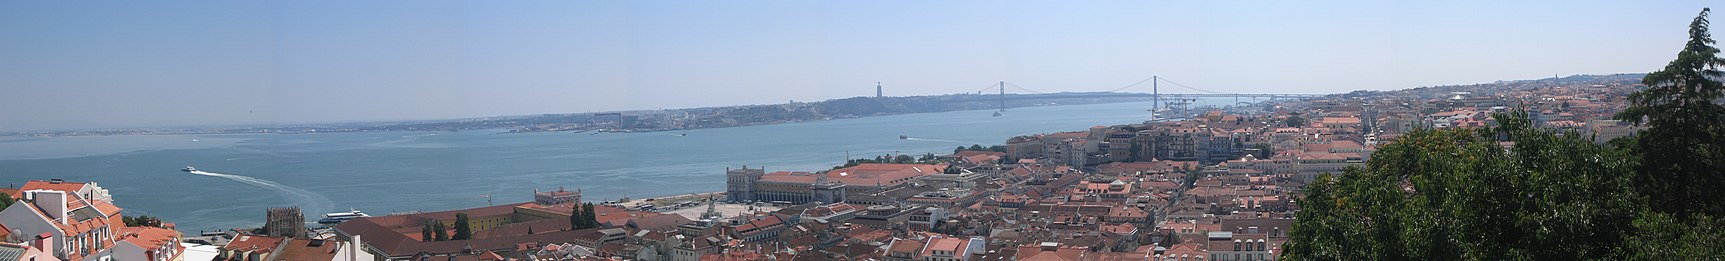 Panorama over Lissabon